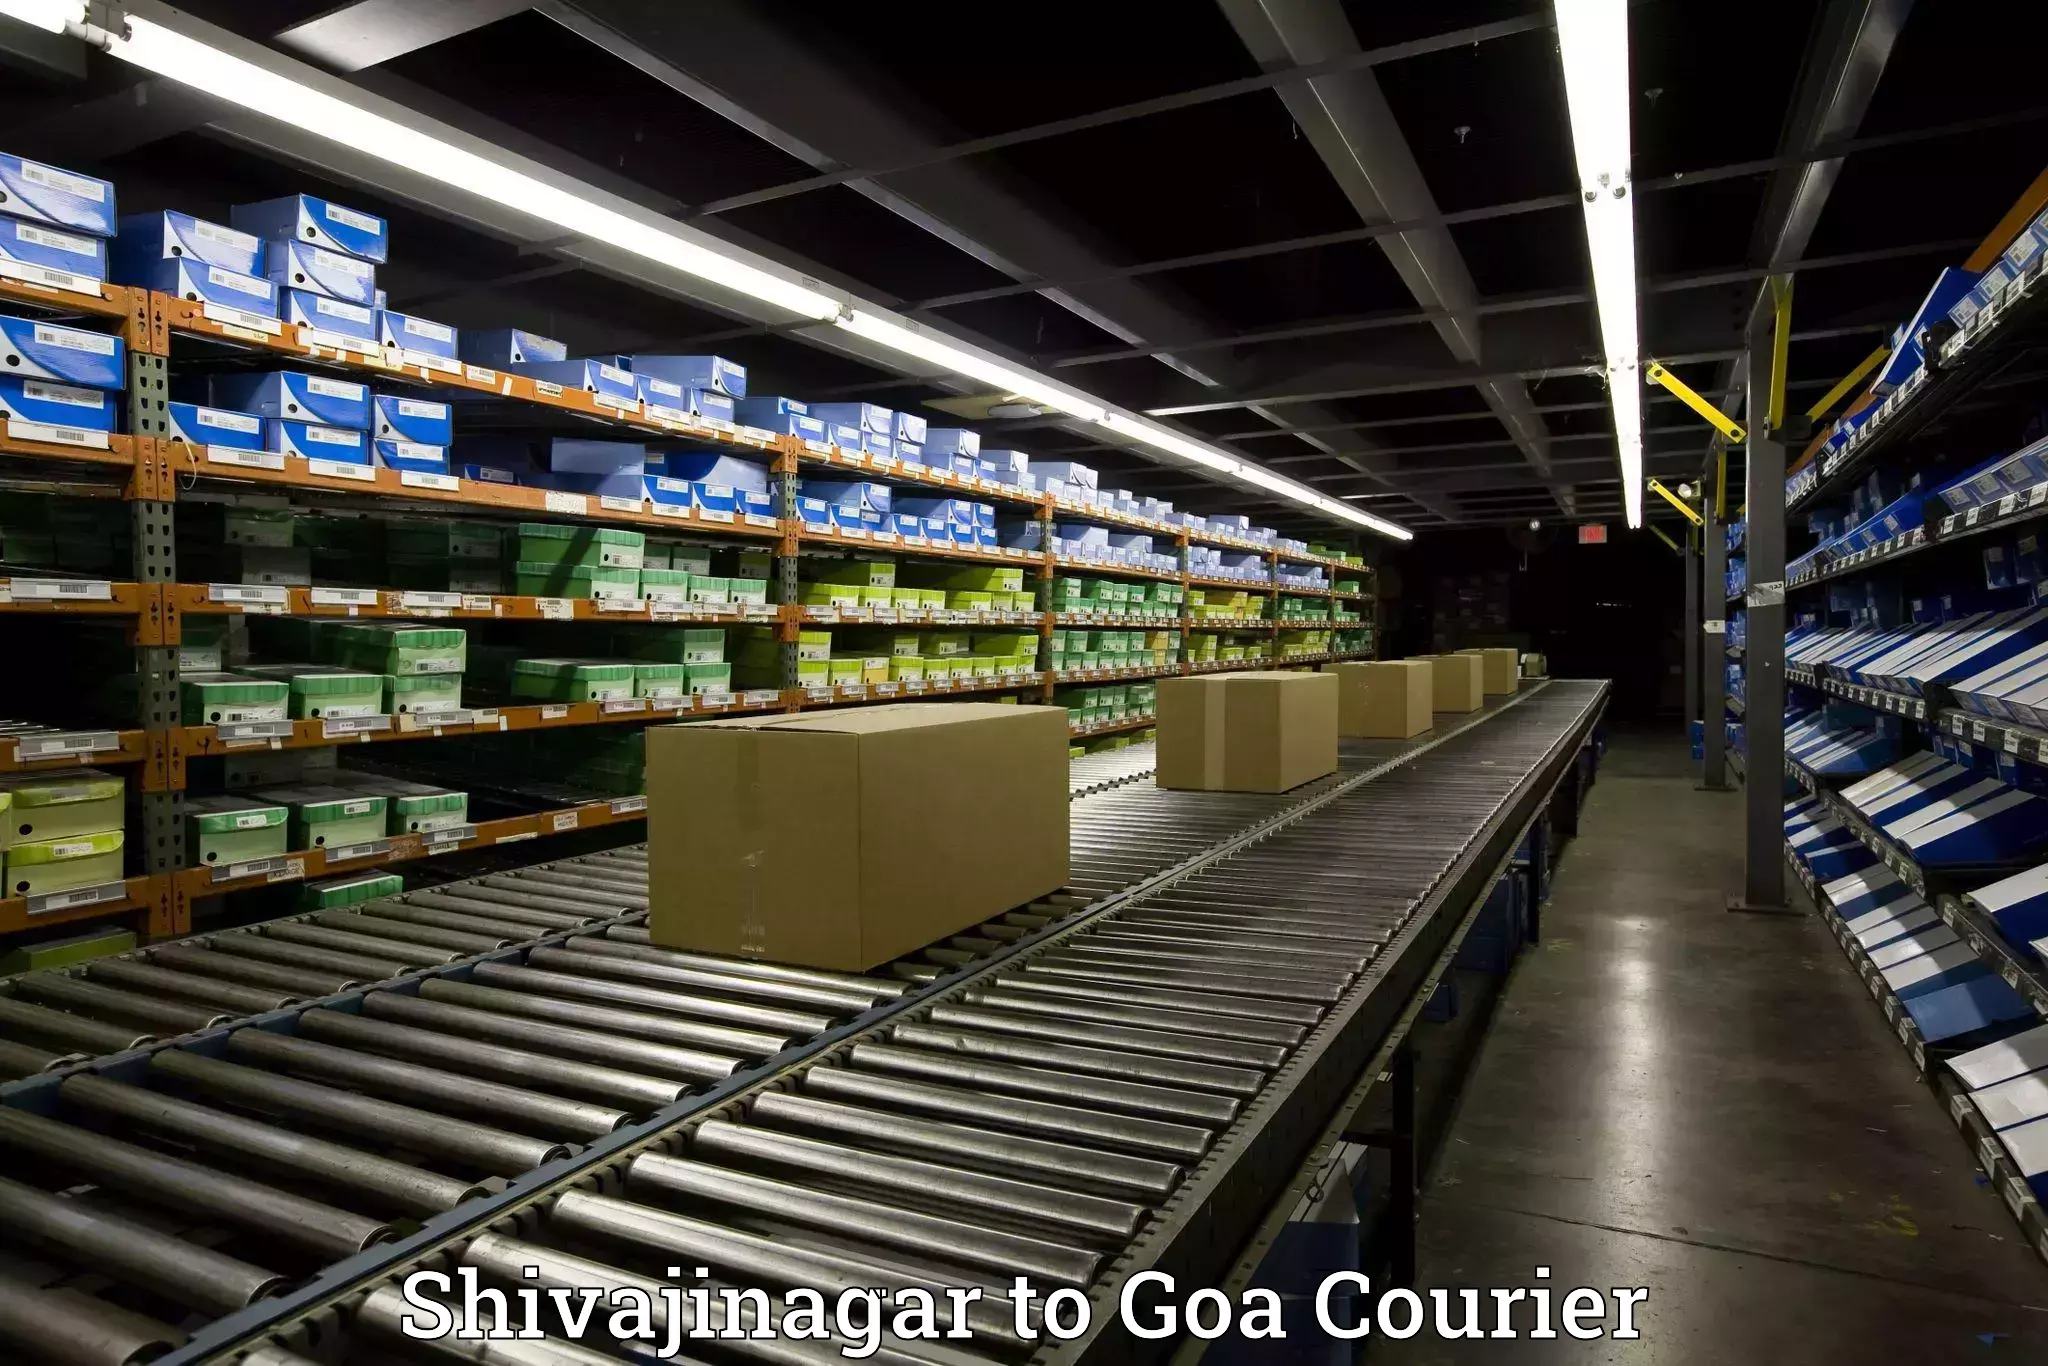 Furniture delivery service Shivajinagar to Goa